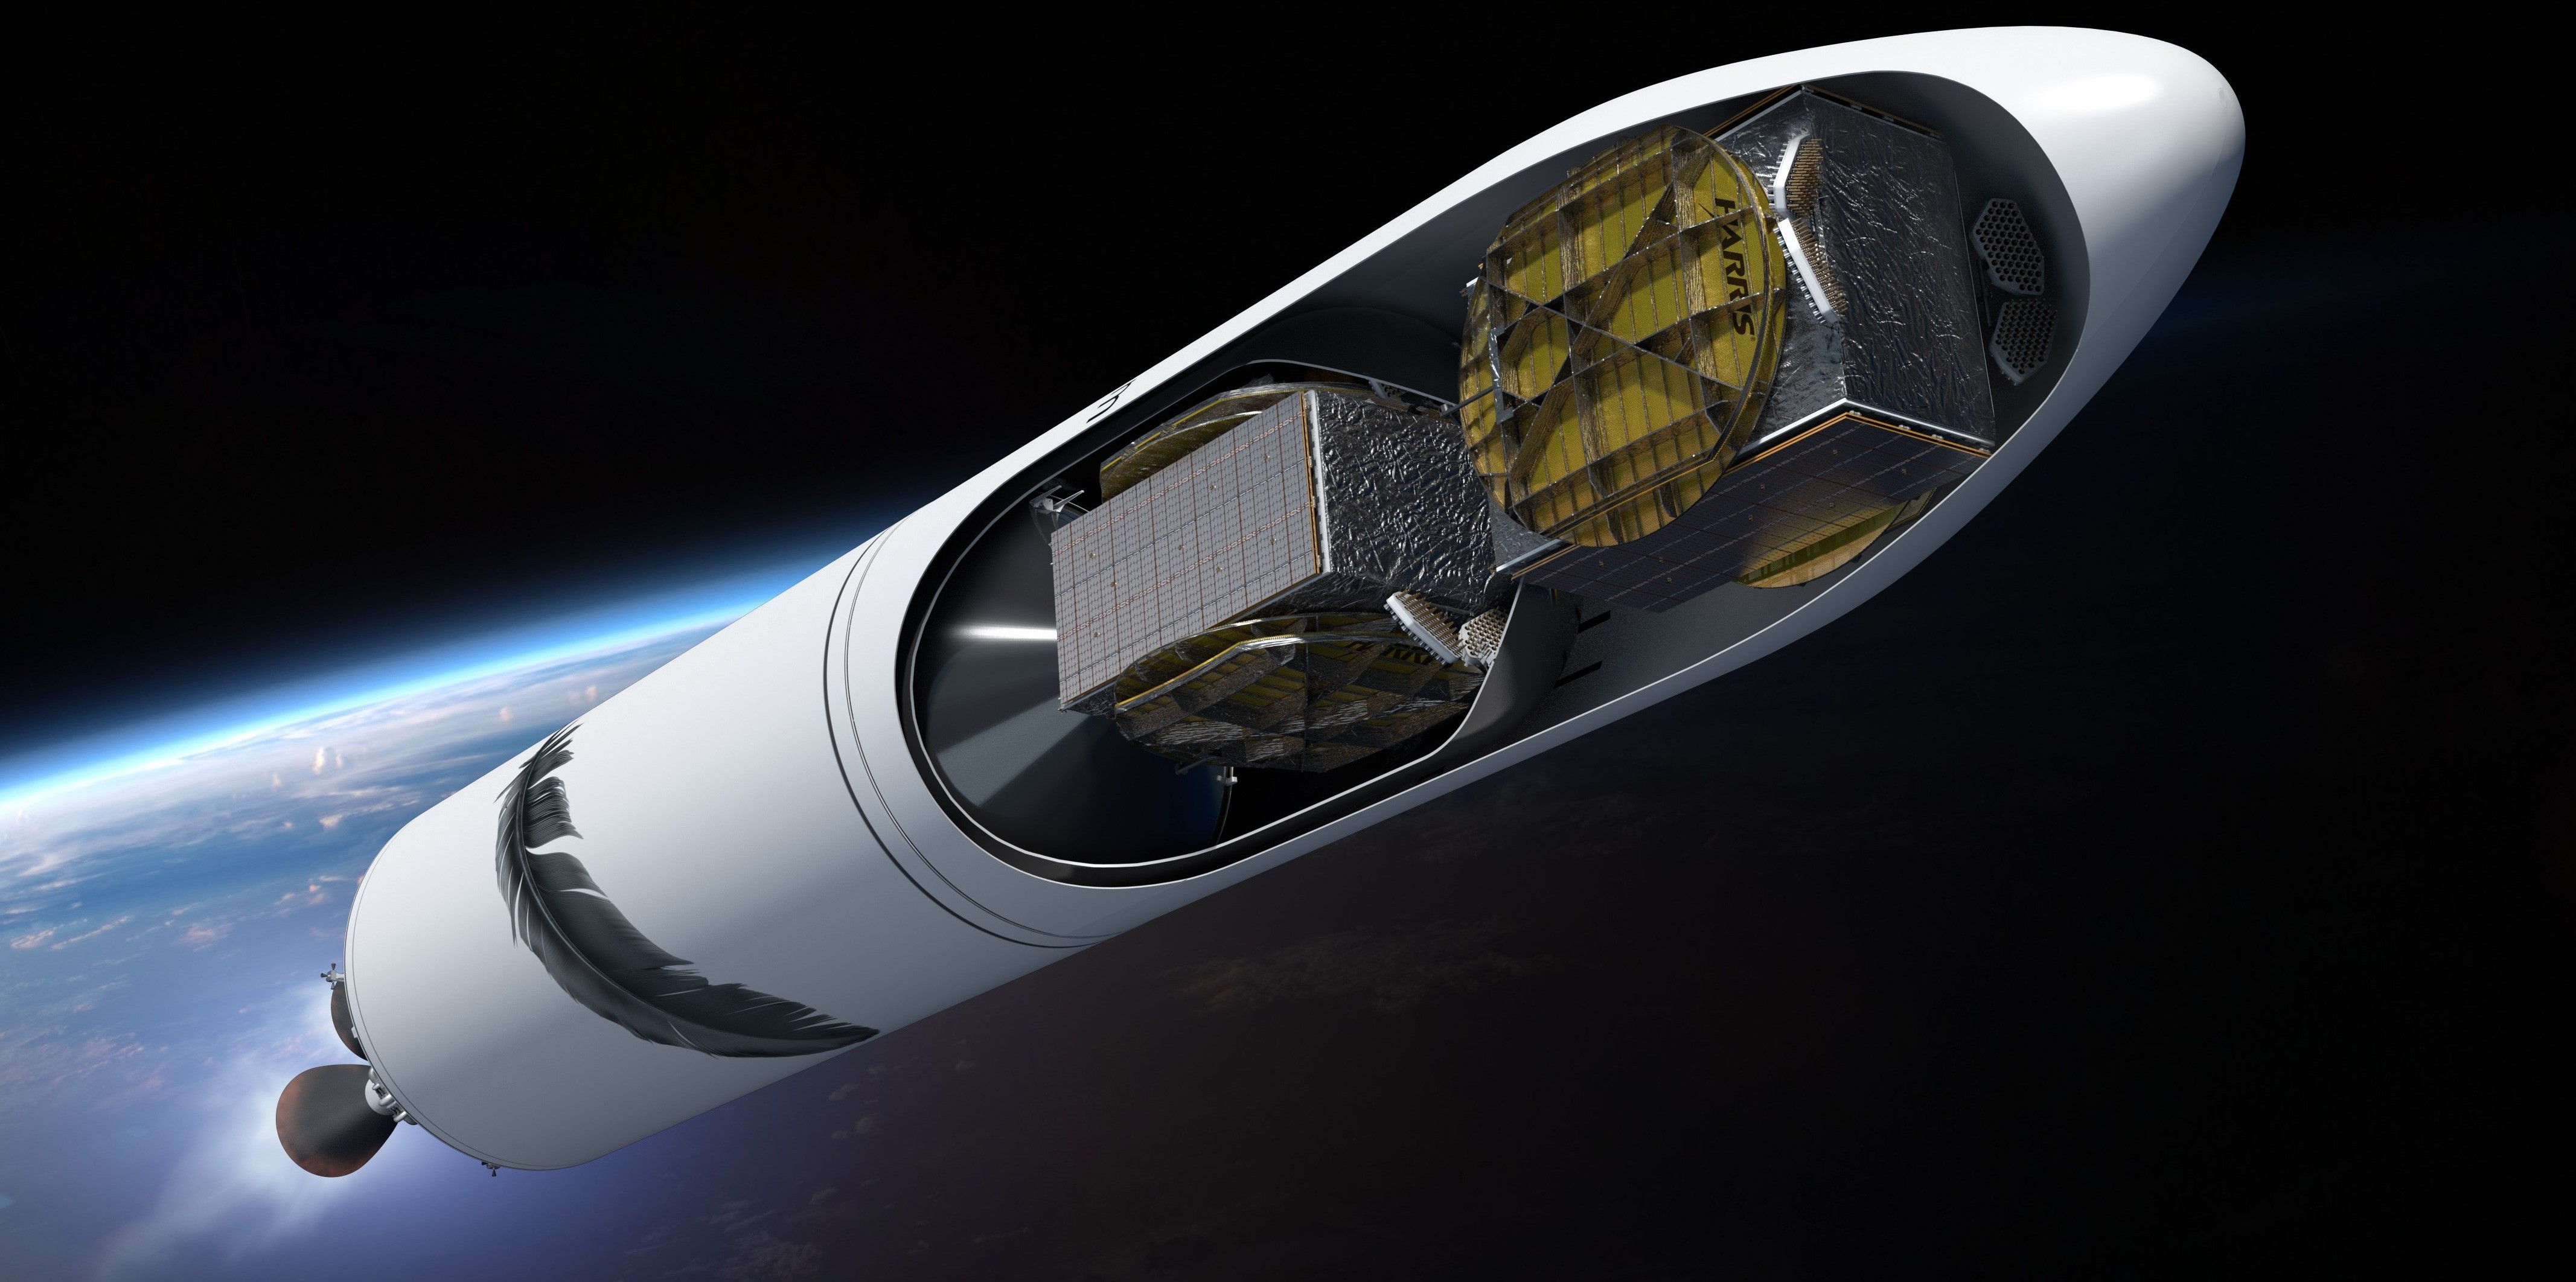 Blue Origin teases first New Glenn rocket prototype at Blue Moon lander  event